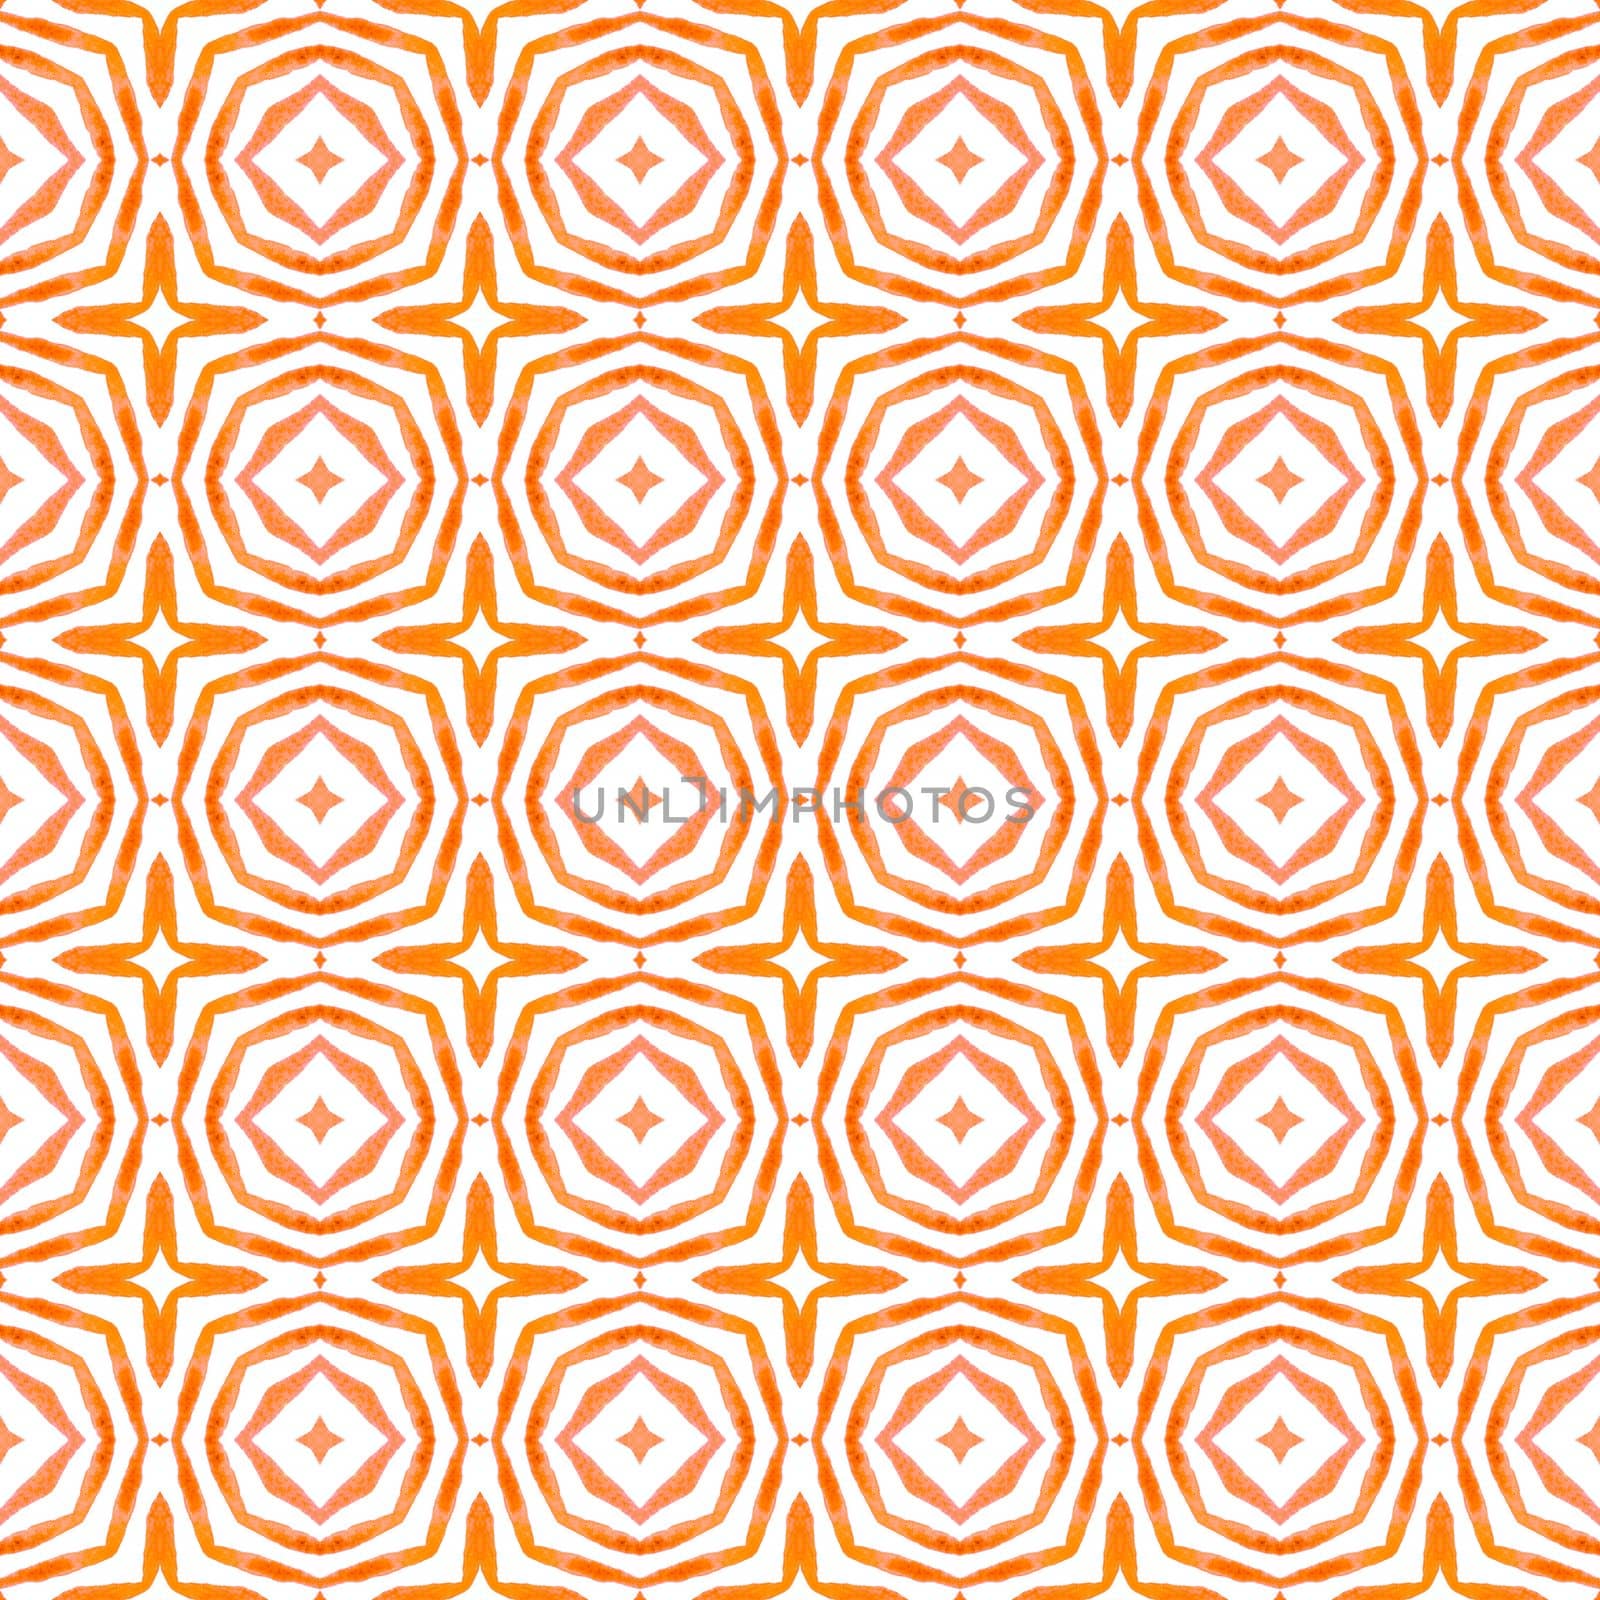 Repeating striped hand drawn border. Orange by beginagain